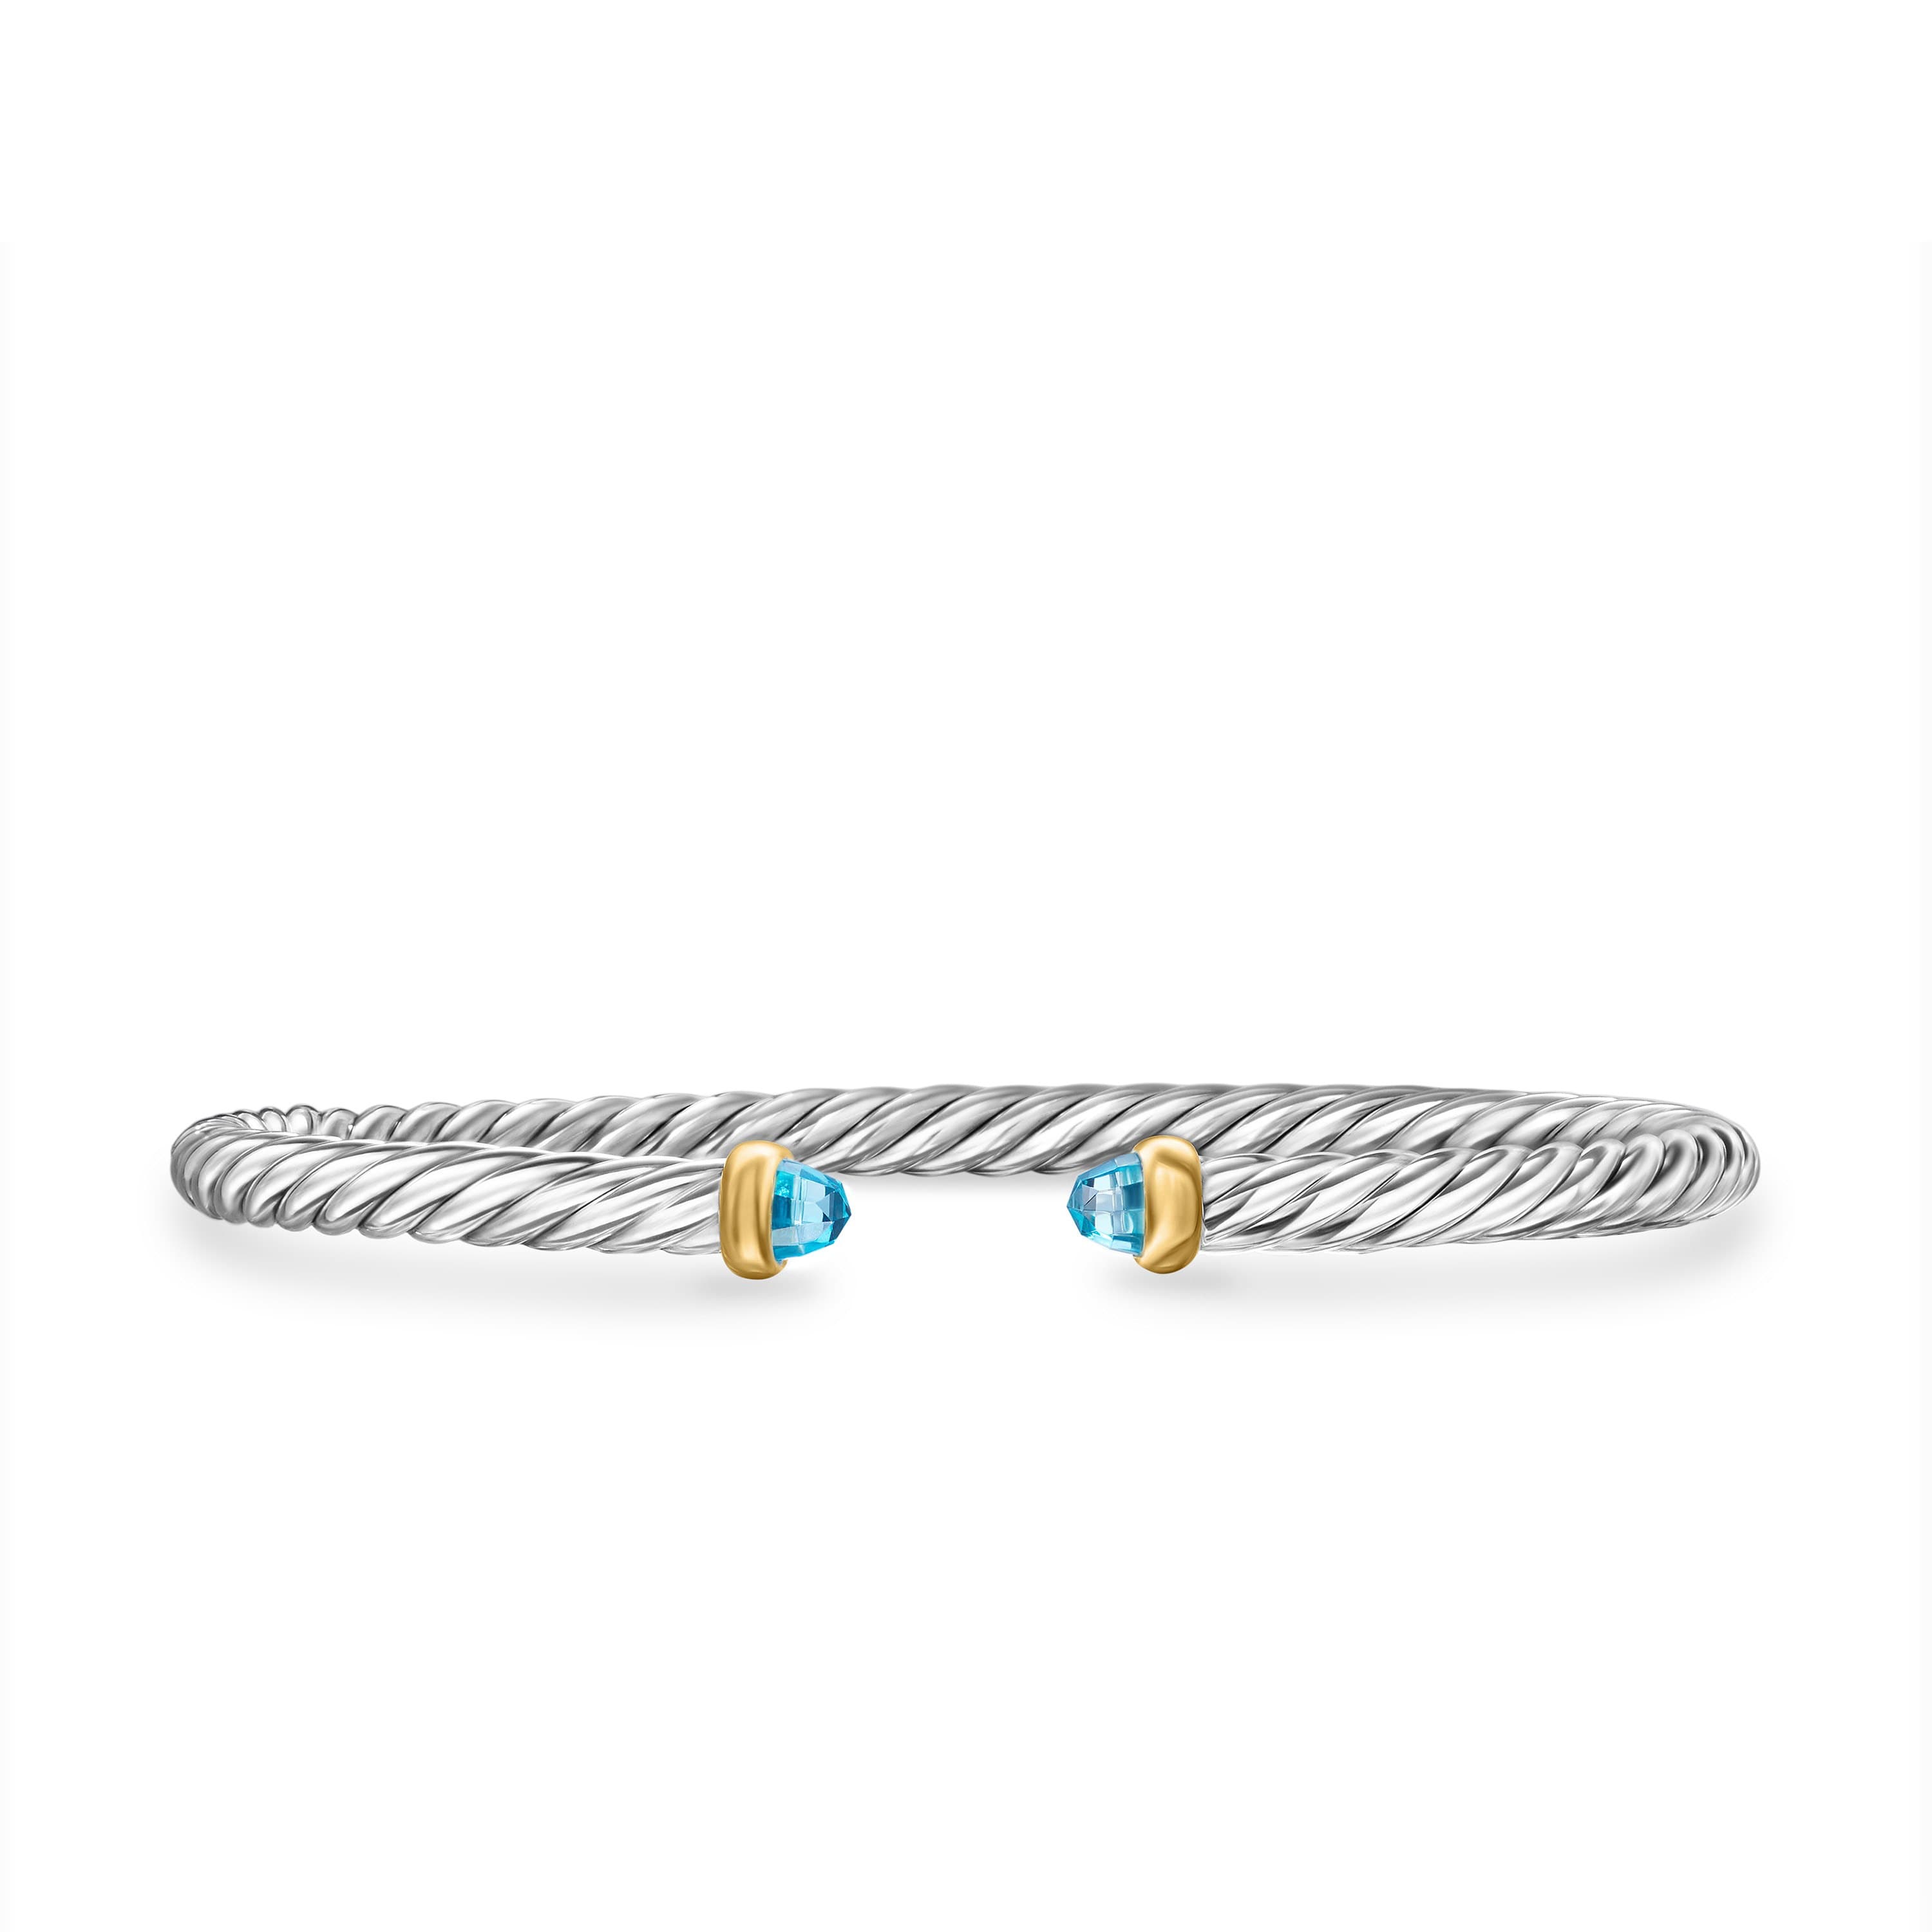 David Yurman Cable Flex Sterling Silver Bracelet with Blue Topaz, Size Large 0